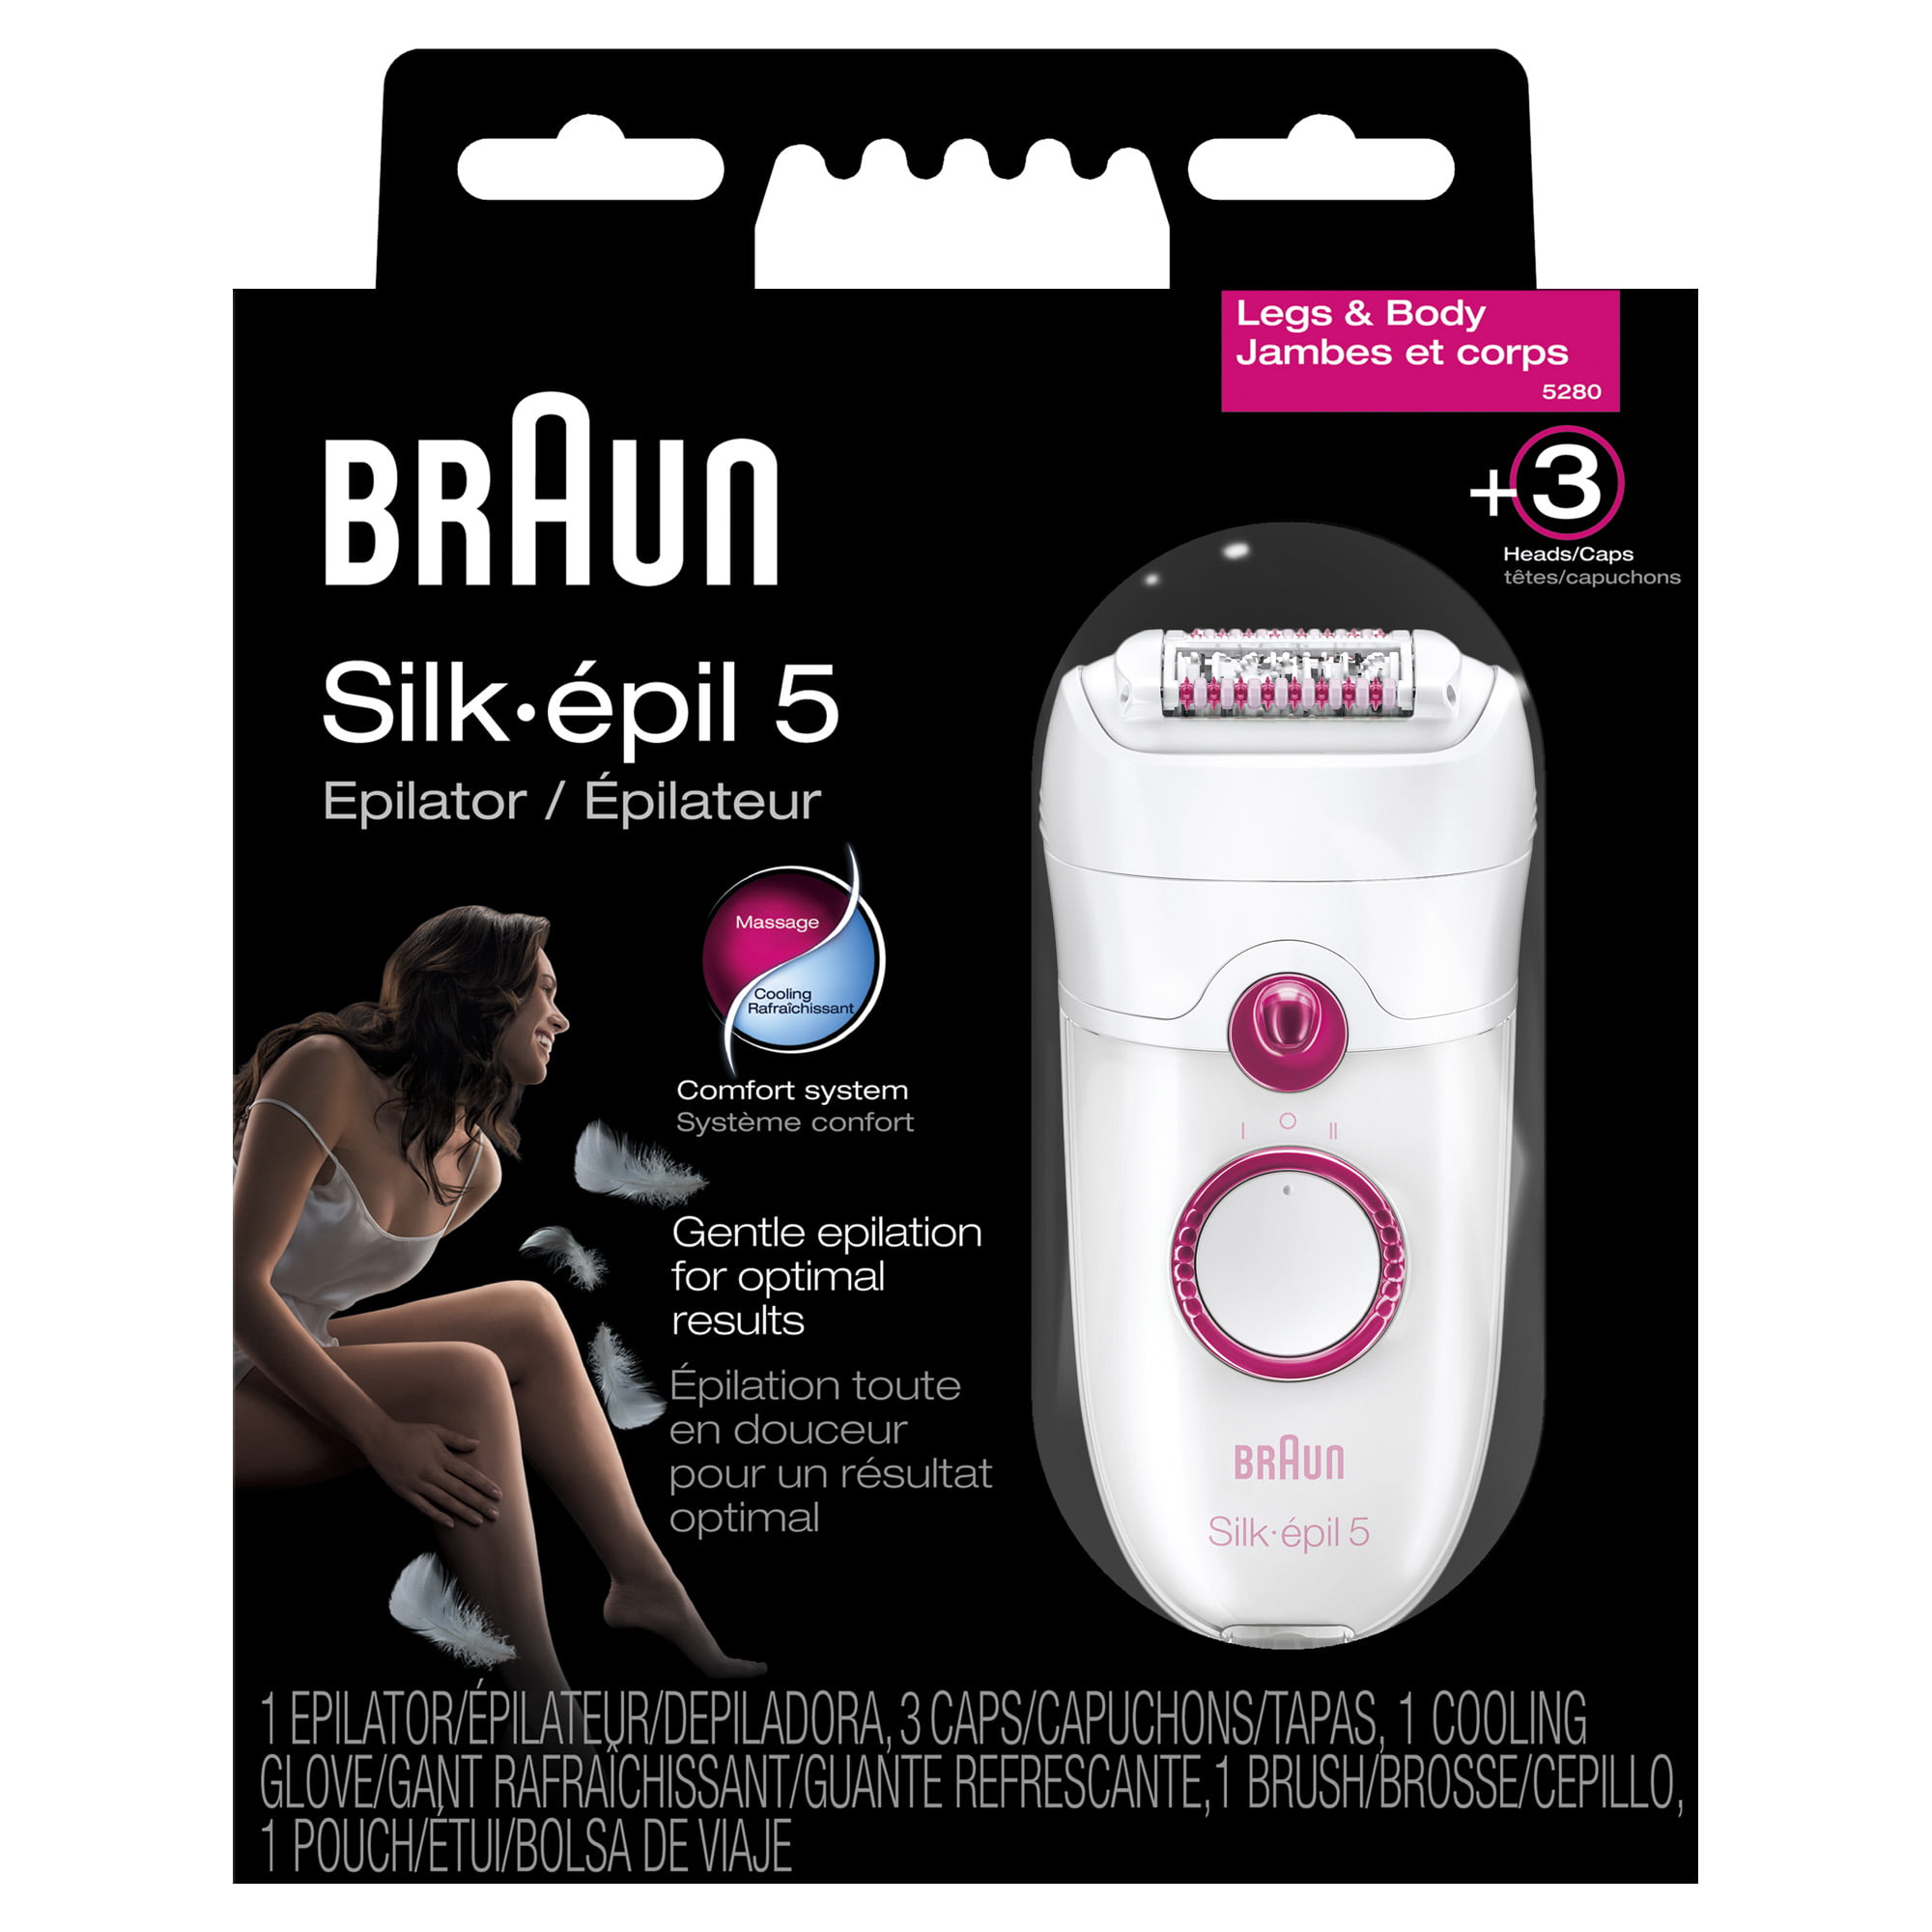 Trimmer Wet Power with Dry Bikini 5 5-280 Silk-epil Epilator Braun